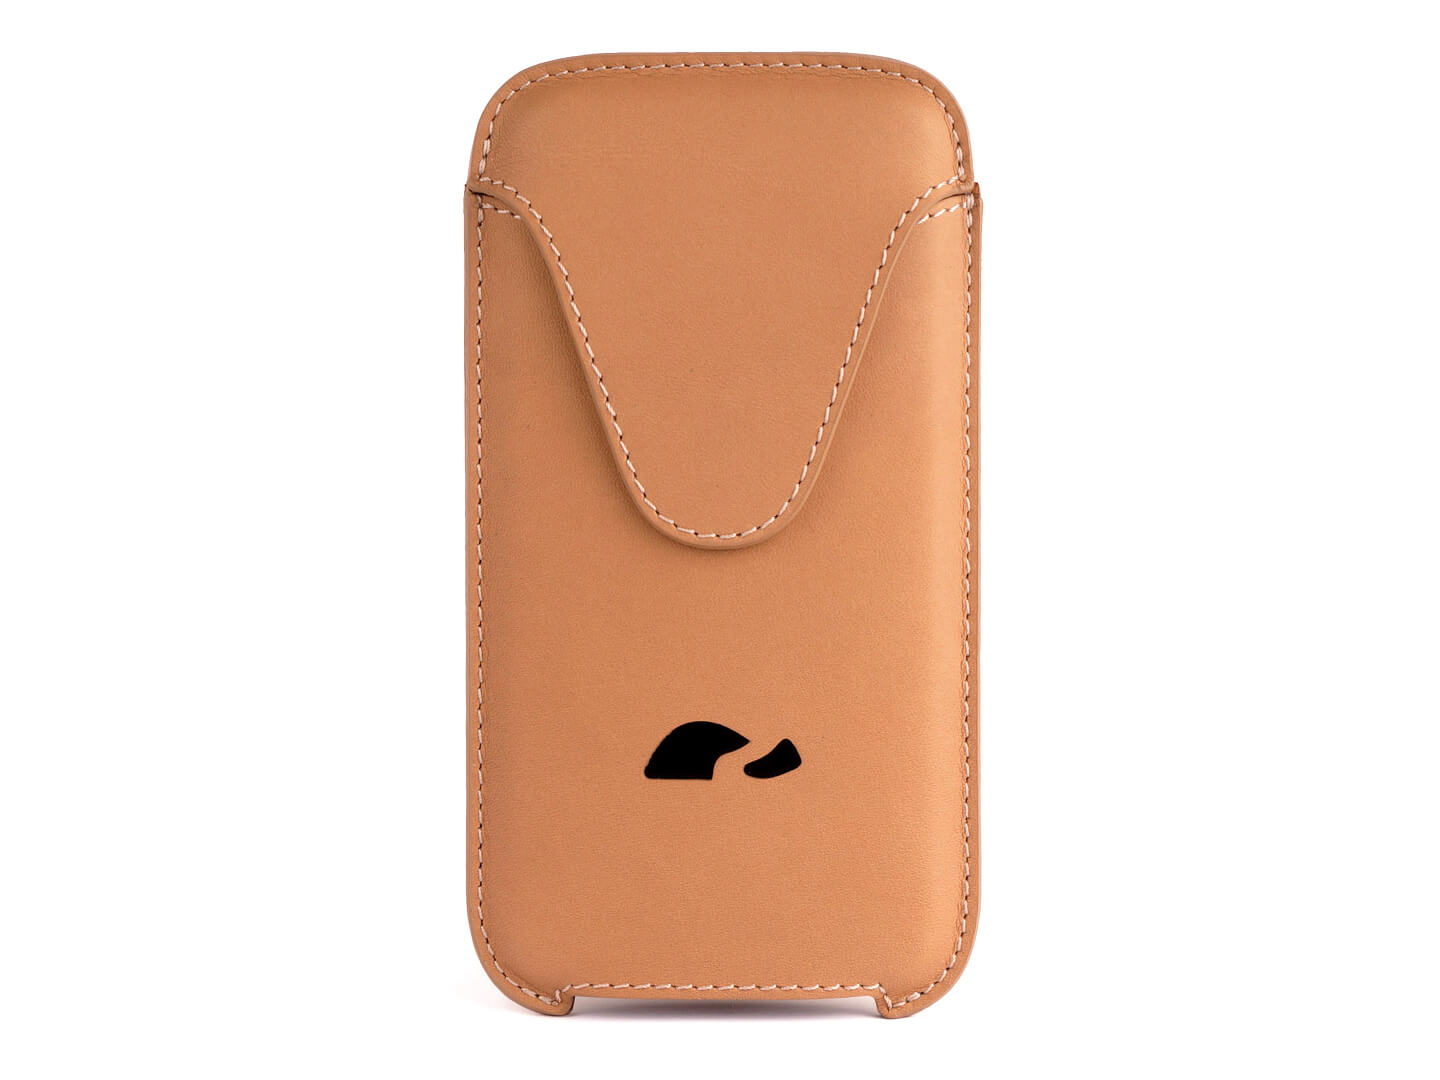 iPhone 6/7/8 Plus / XS Max leather sleeve case - slim design veg-tan leather - beige - Carapaz